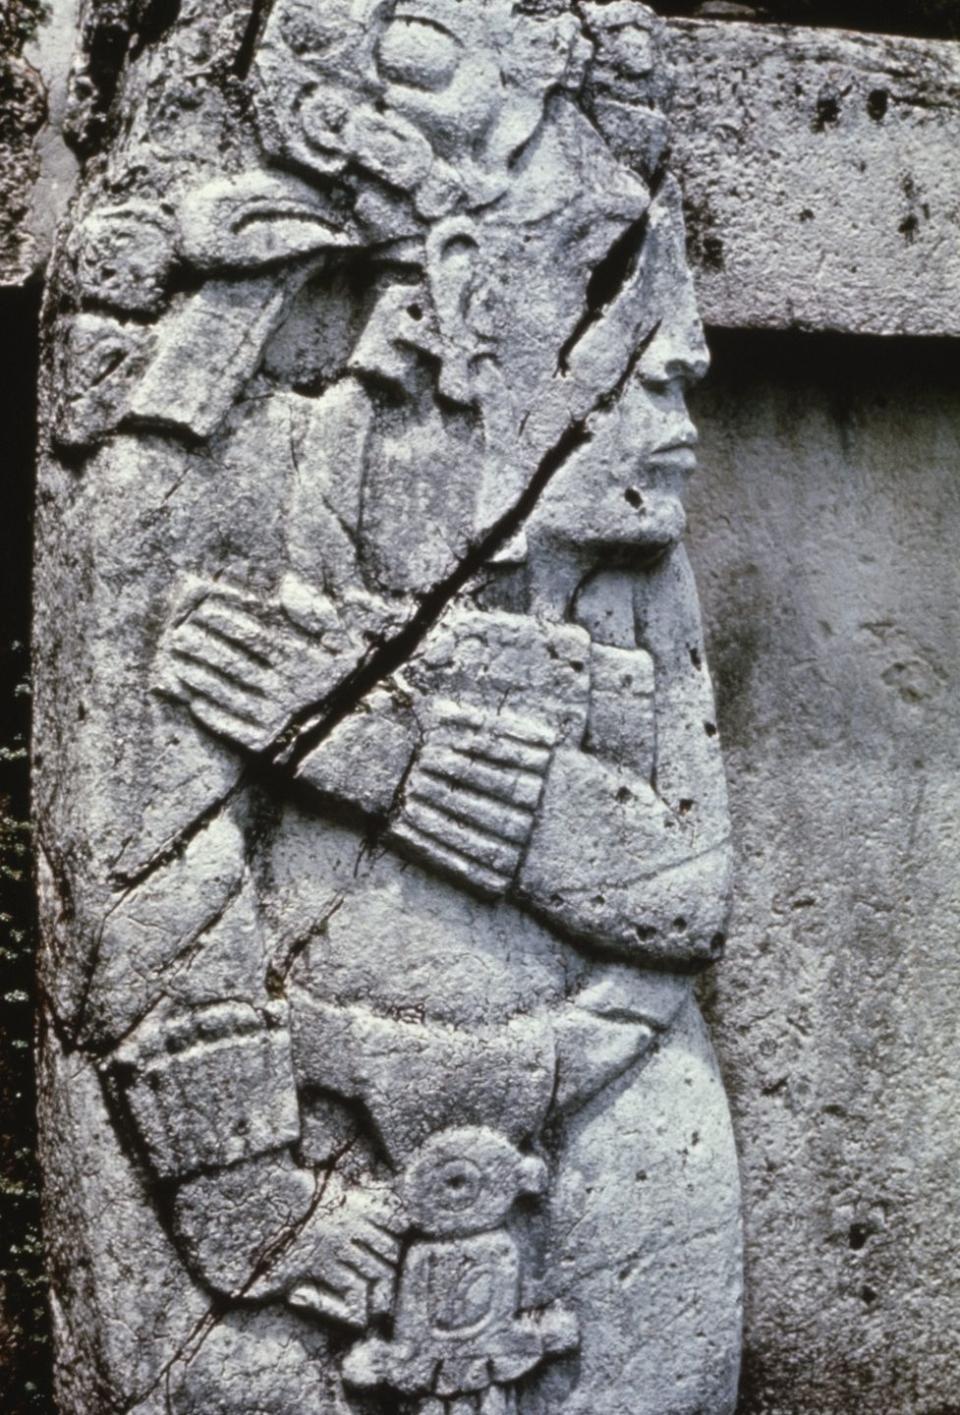 K'inich Janaab' Pakal (615 - 683)